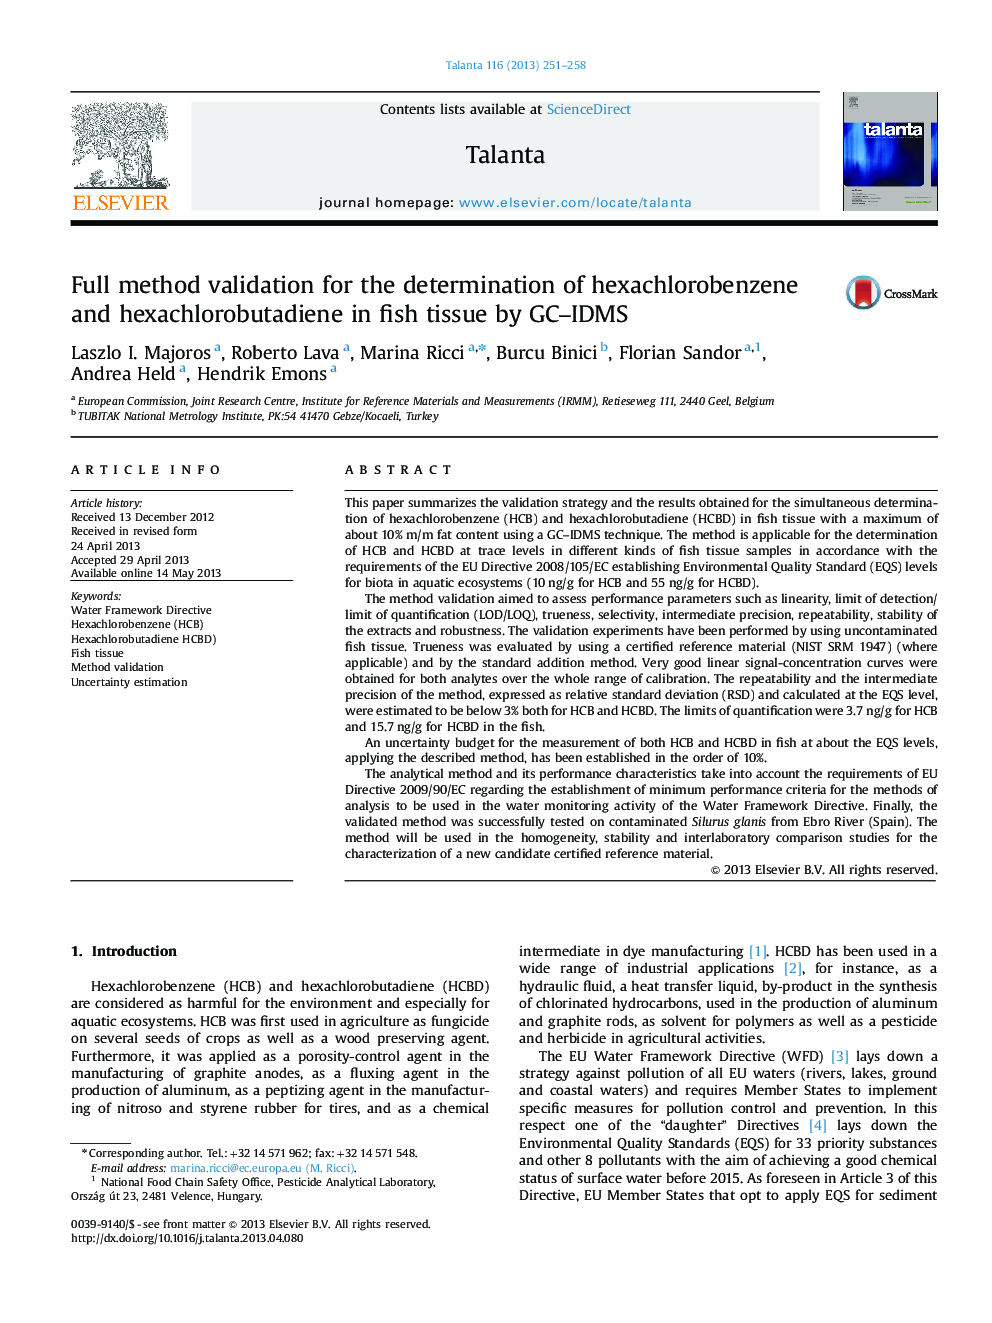 Full method validation for the determination of hexachlorobenzene and hexachlorobutadiene in fish tissue by GC-IDMS